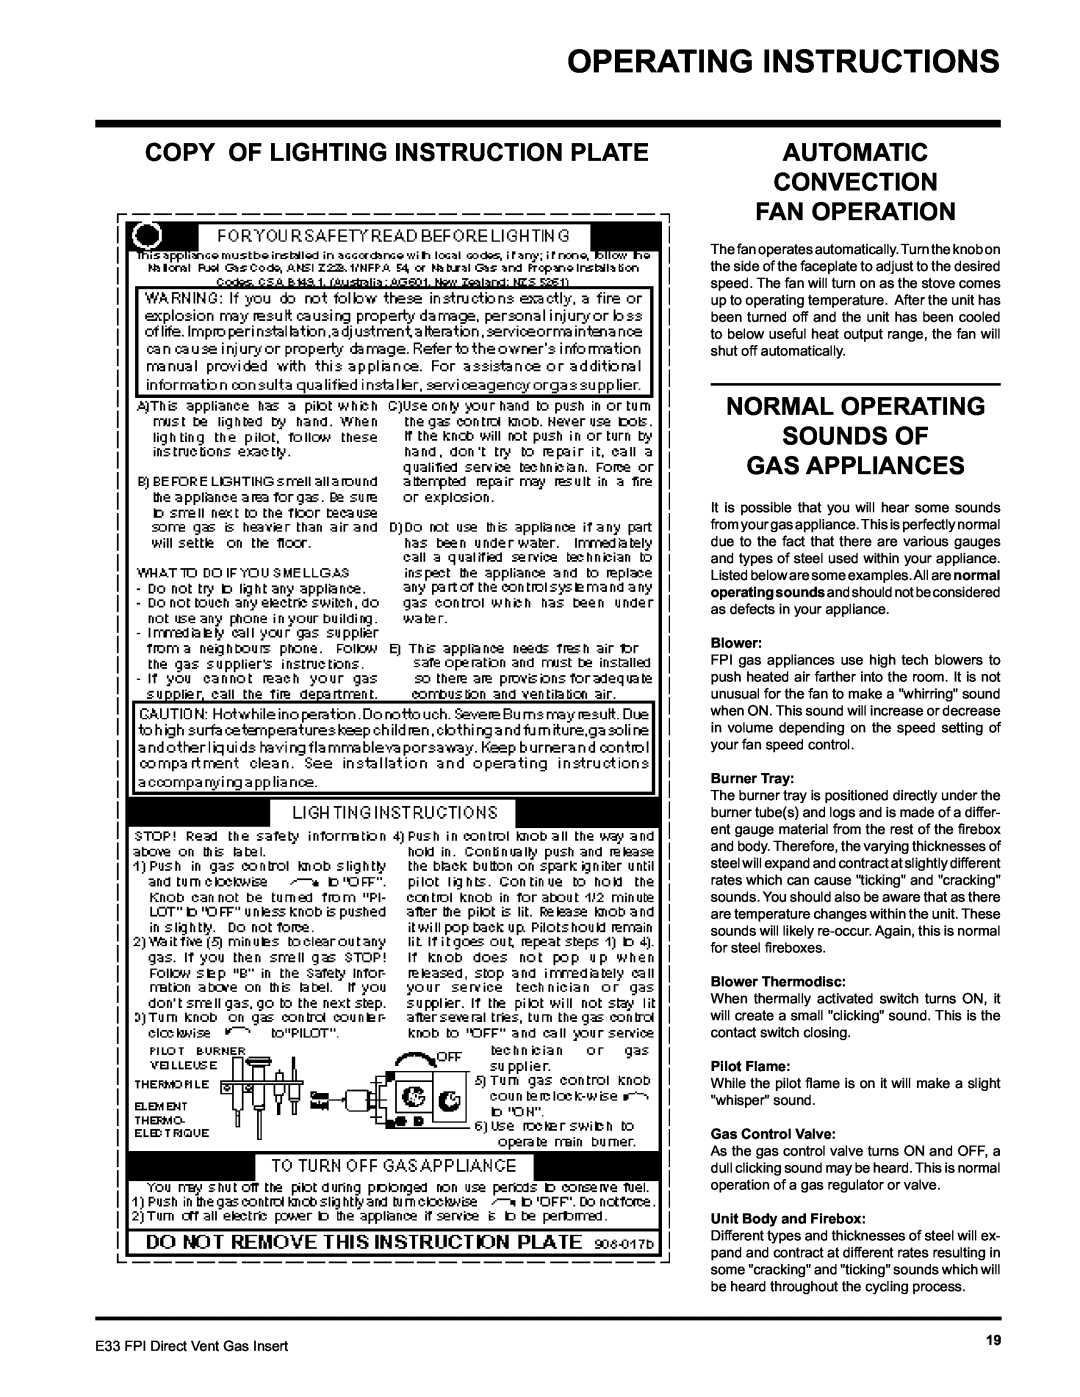 Regency E33-LP Operating Instructions, Copy Of Lighting Instruction Plate, Normal Operating Sounds Of Gas Appliances 